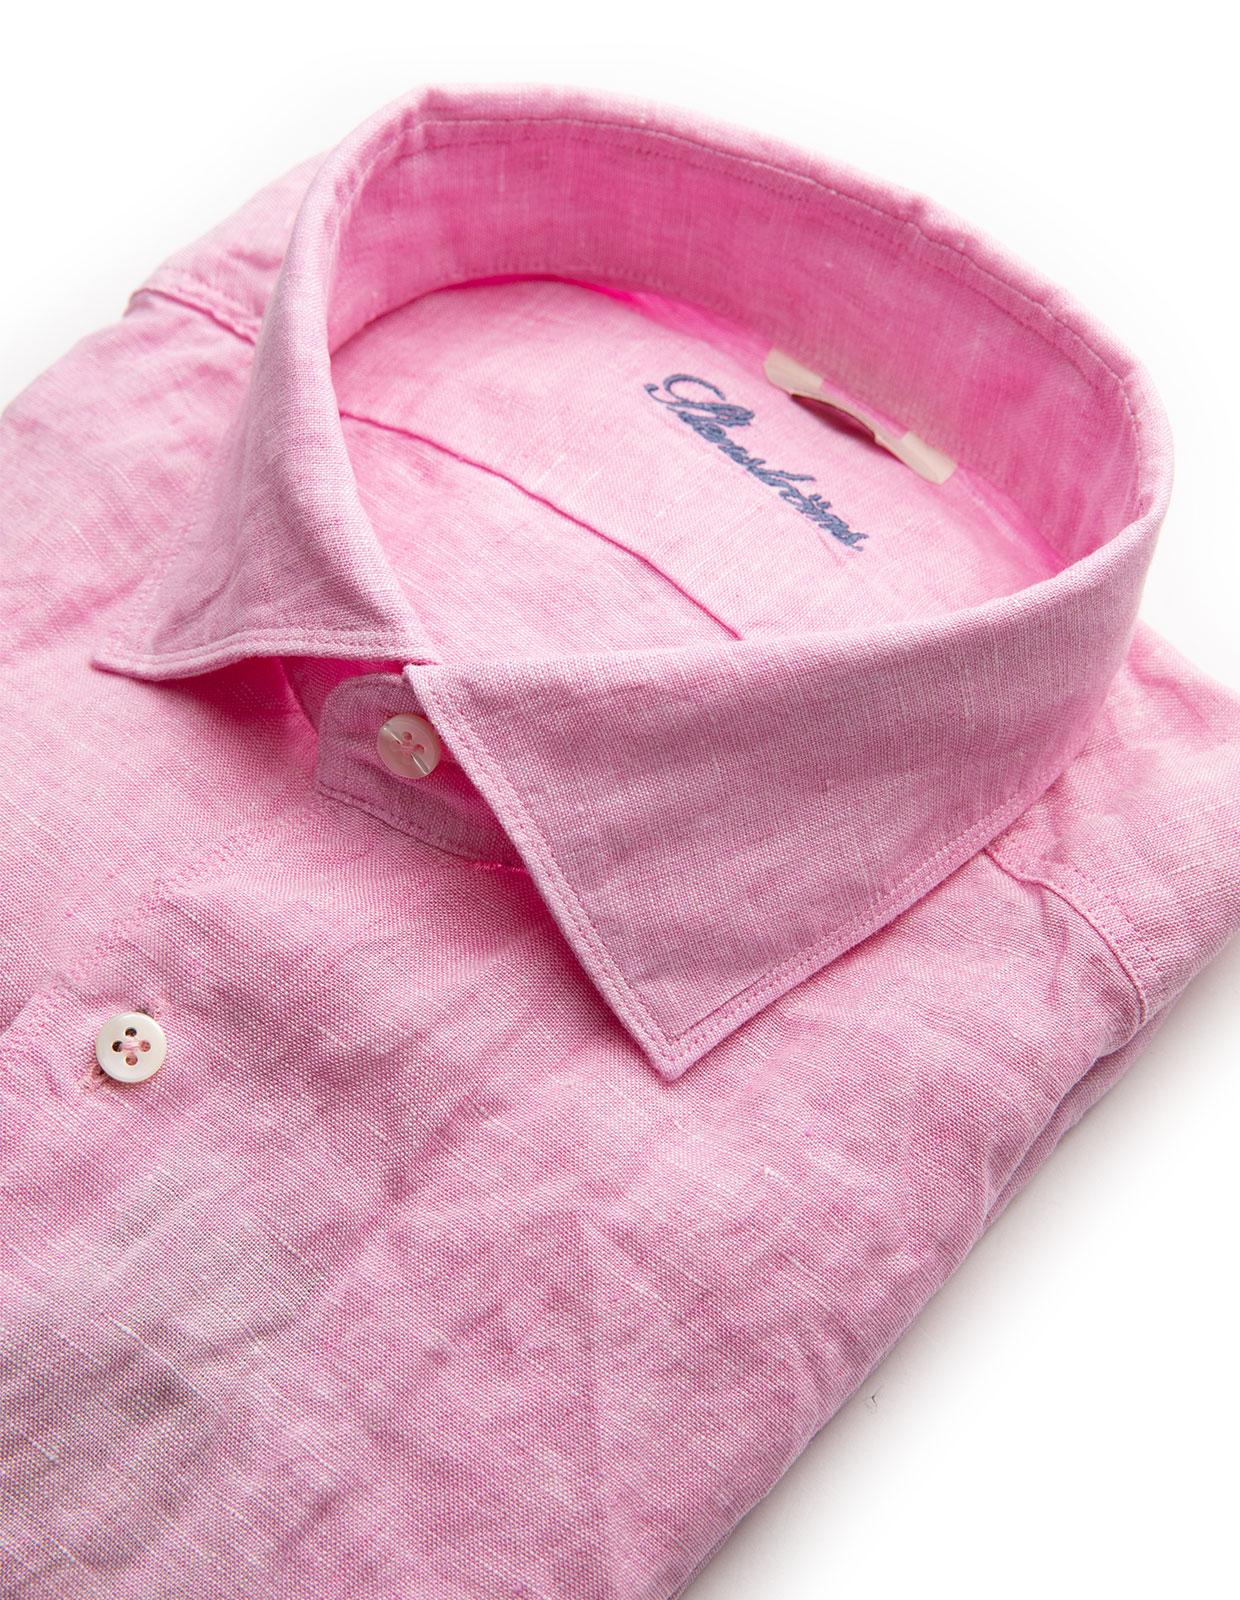 Slimline Linen Shirt Pink